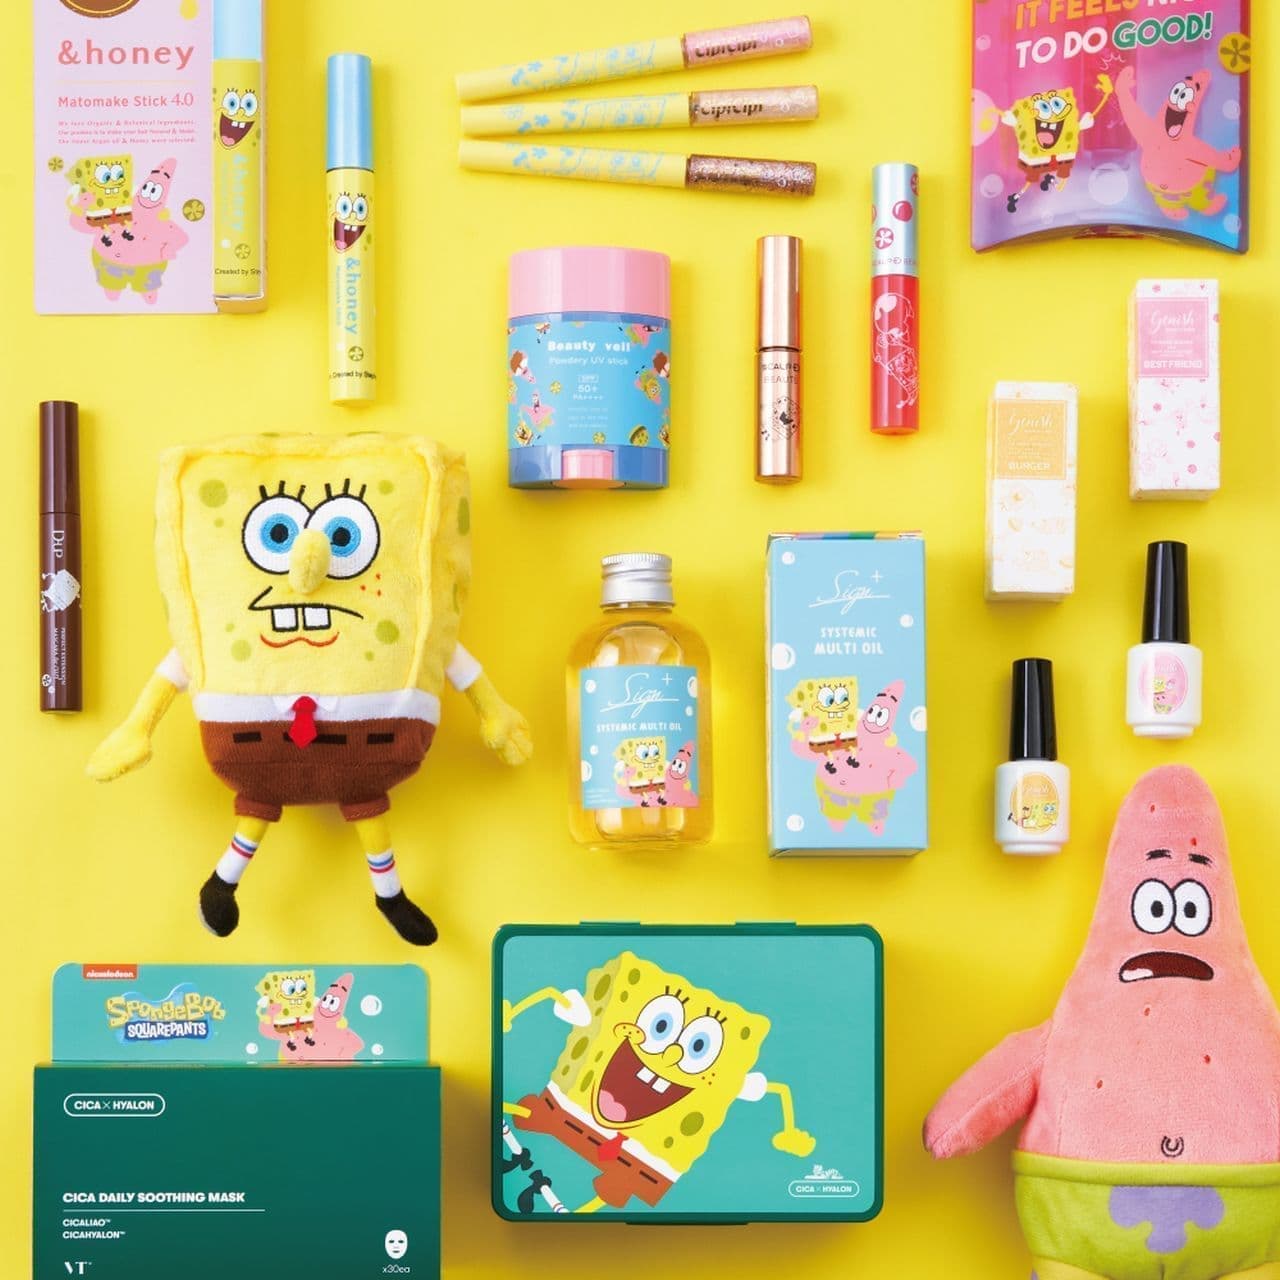 PLAZA x Sponge Bob "Happy Poppin' Cosmetics"